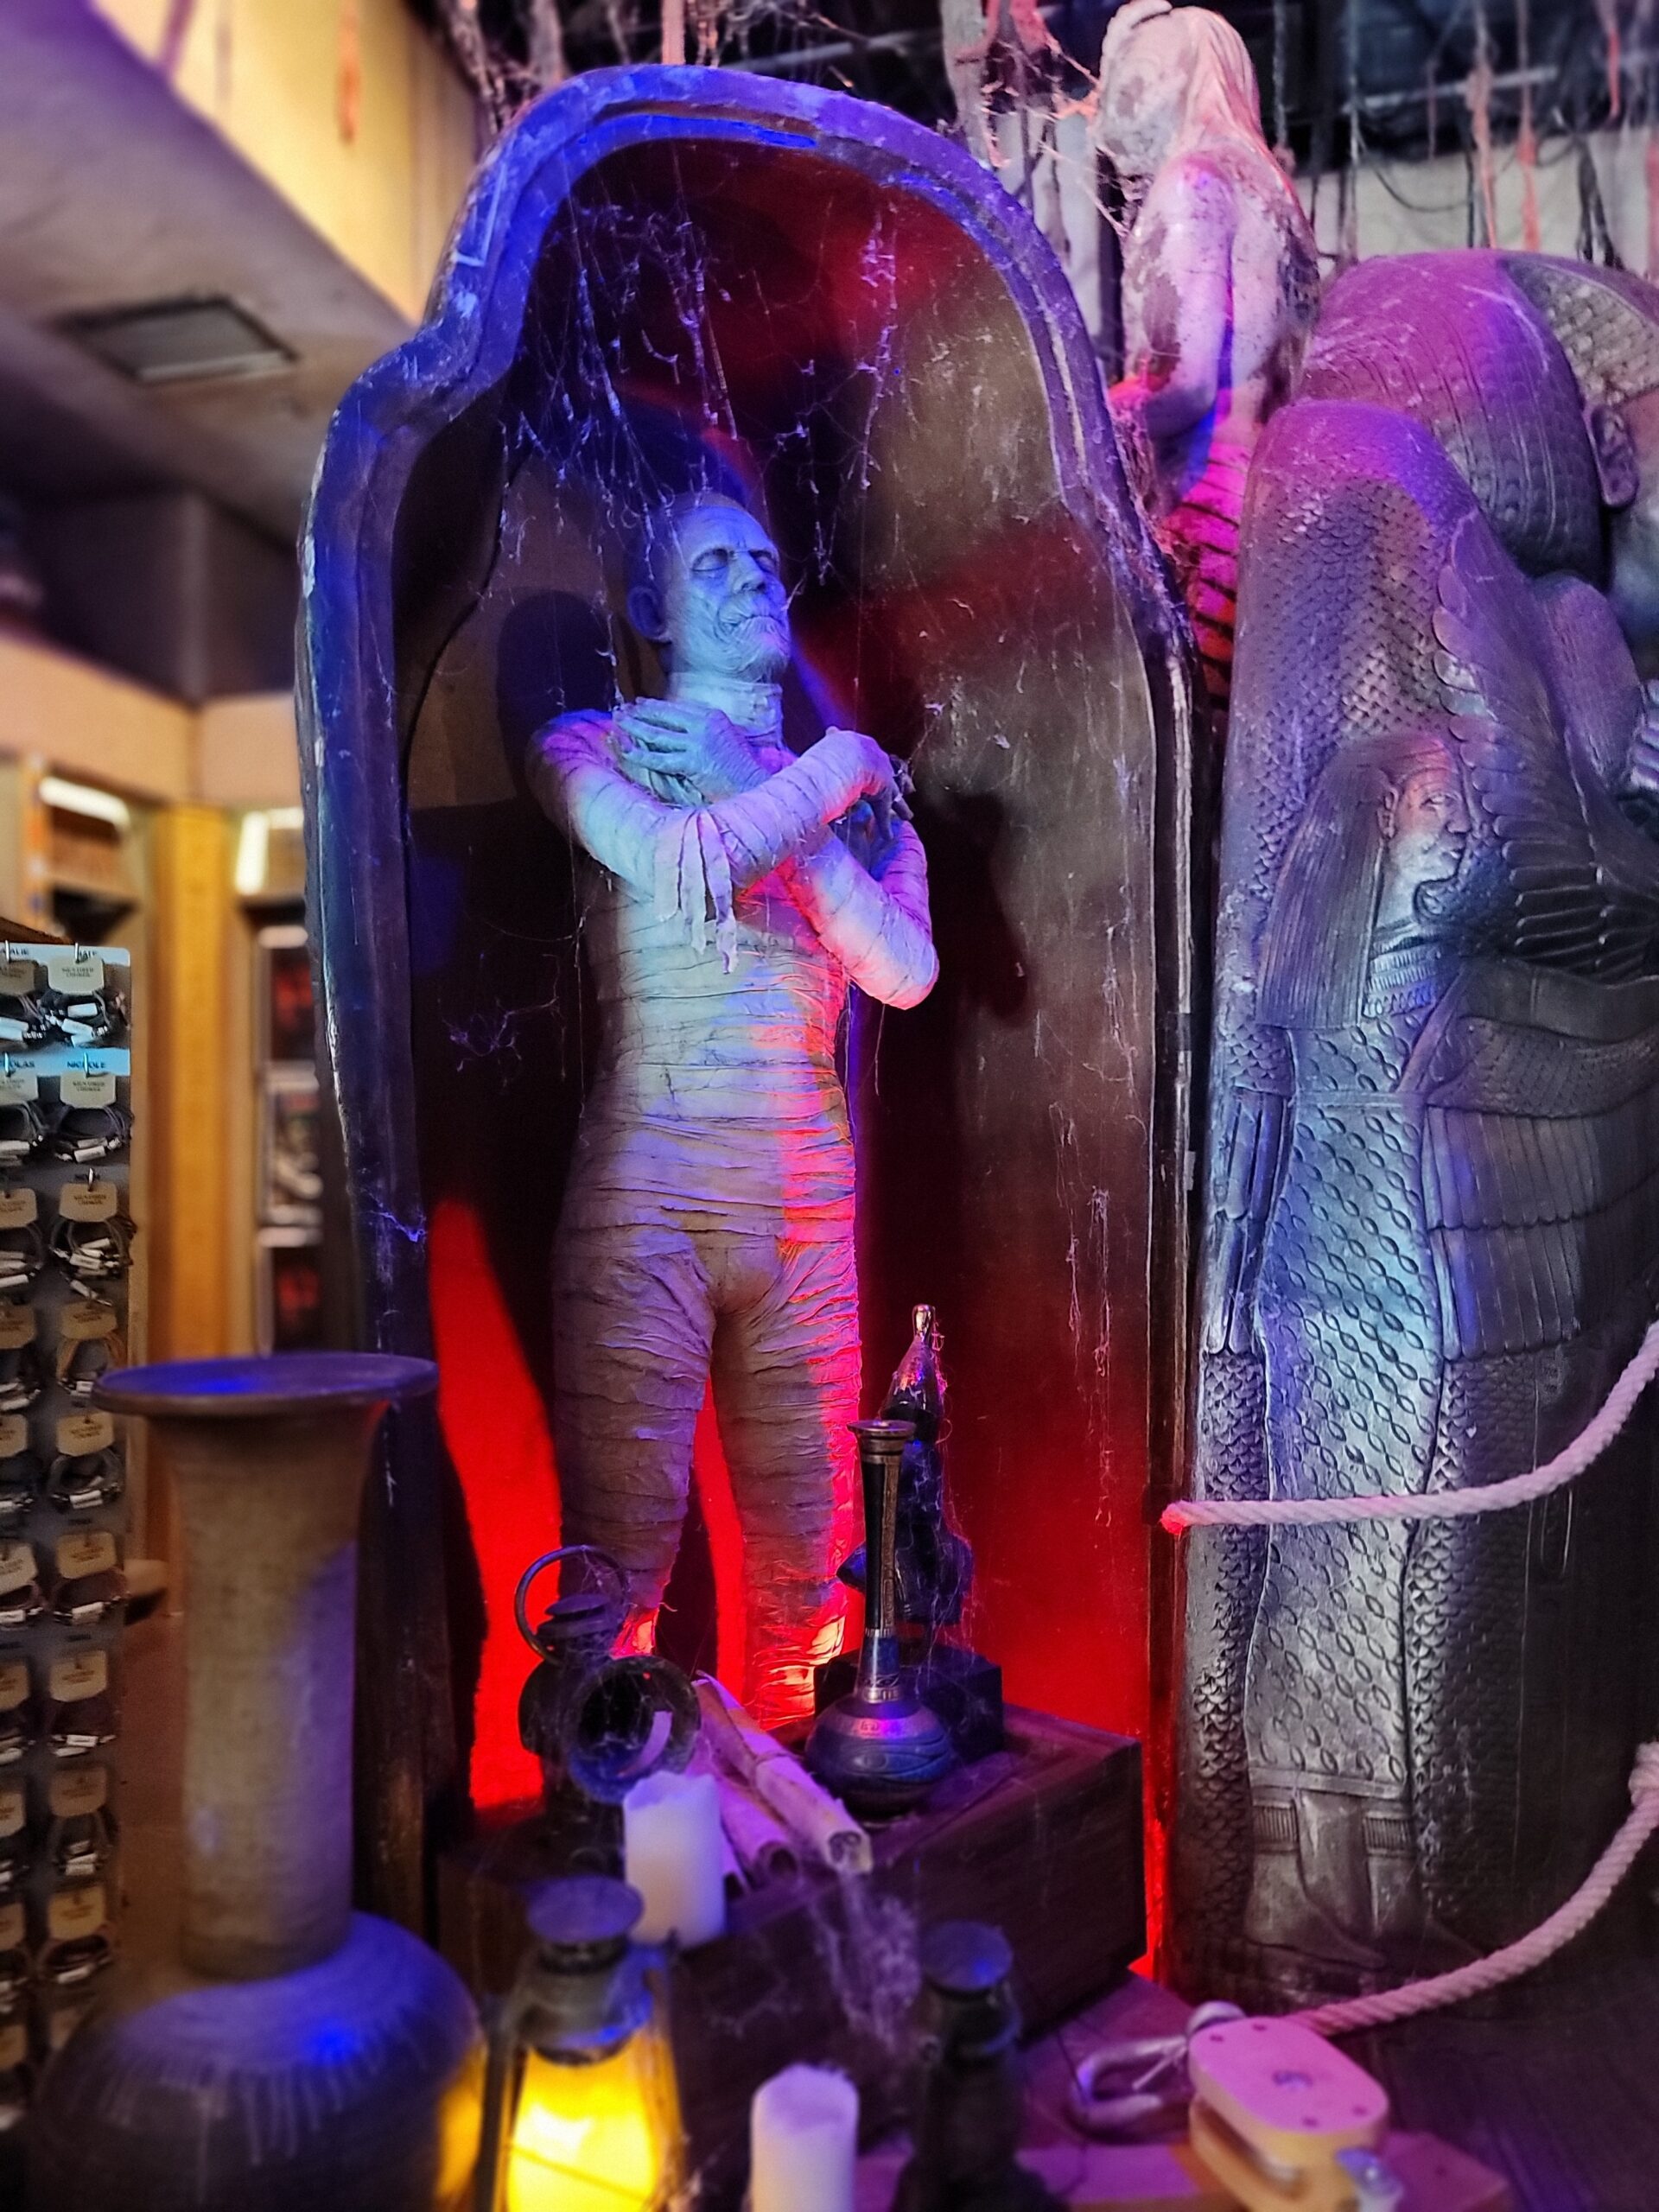 universal studios - the mummy store